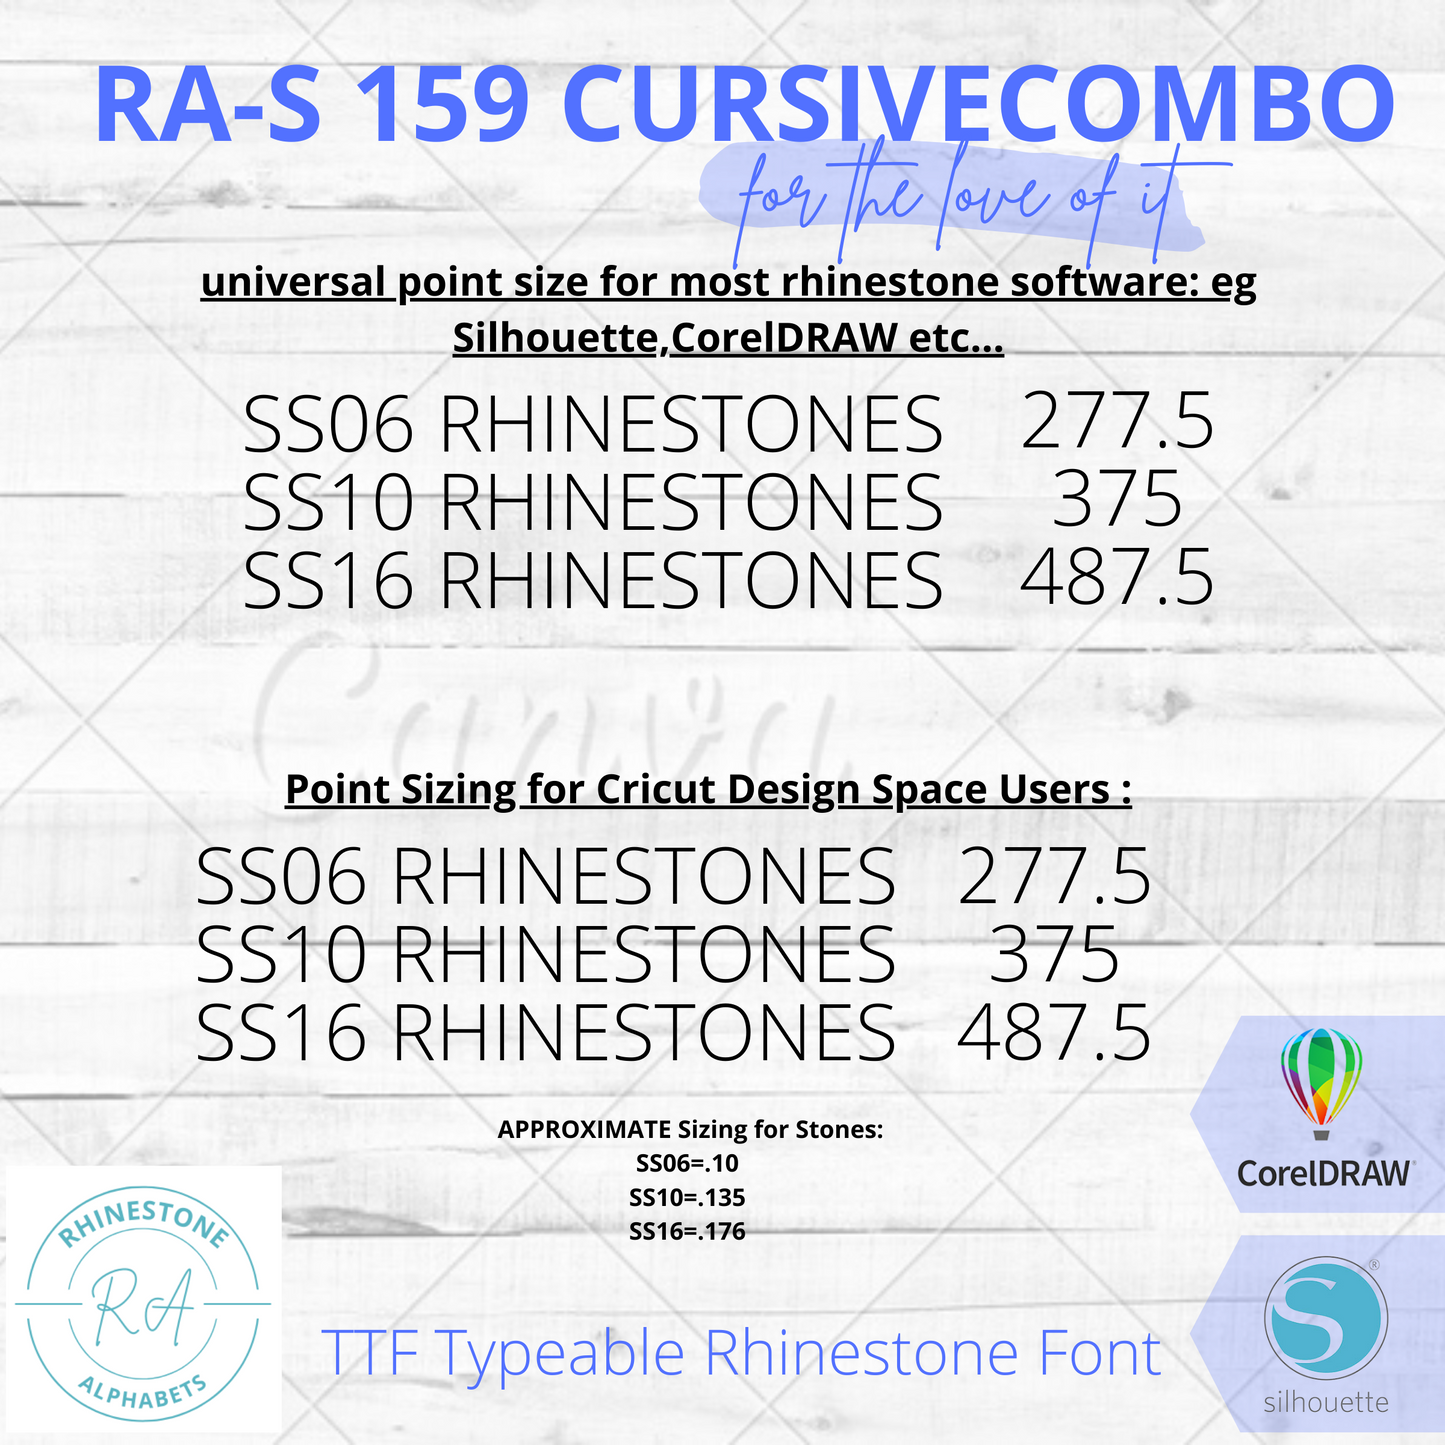 RA-S 159 Cursive Combo